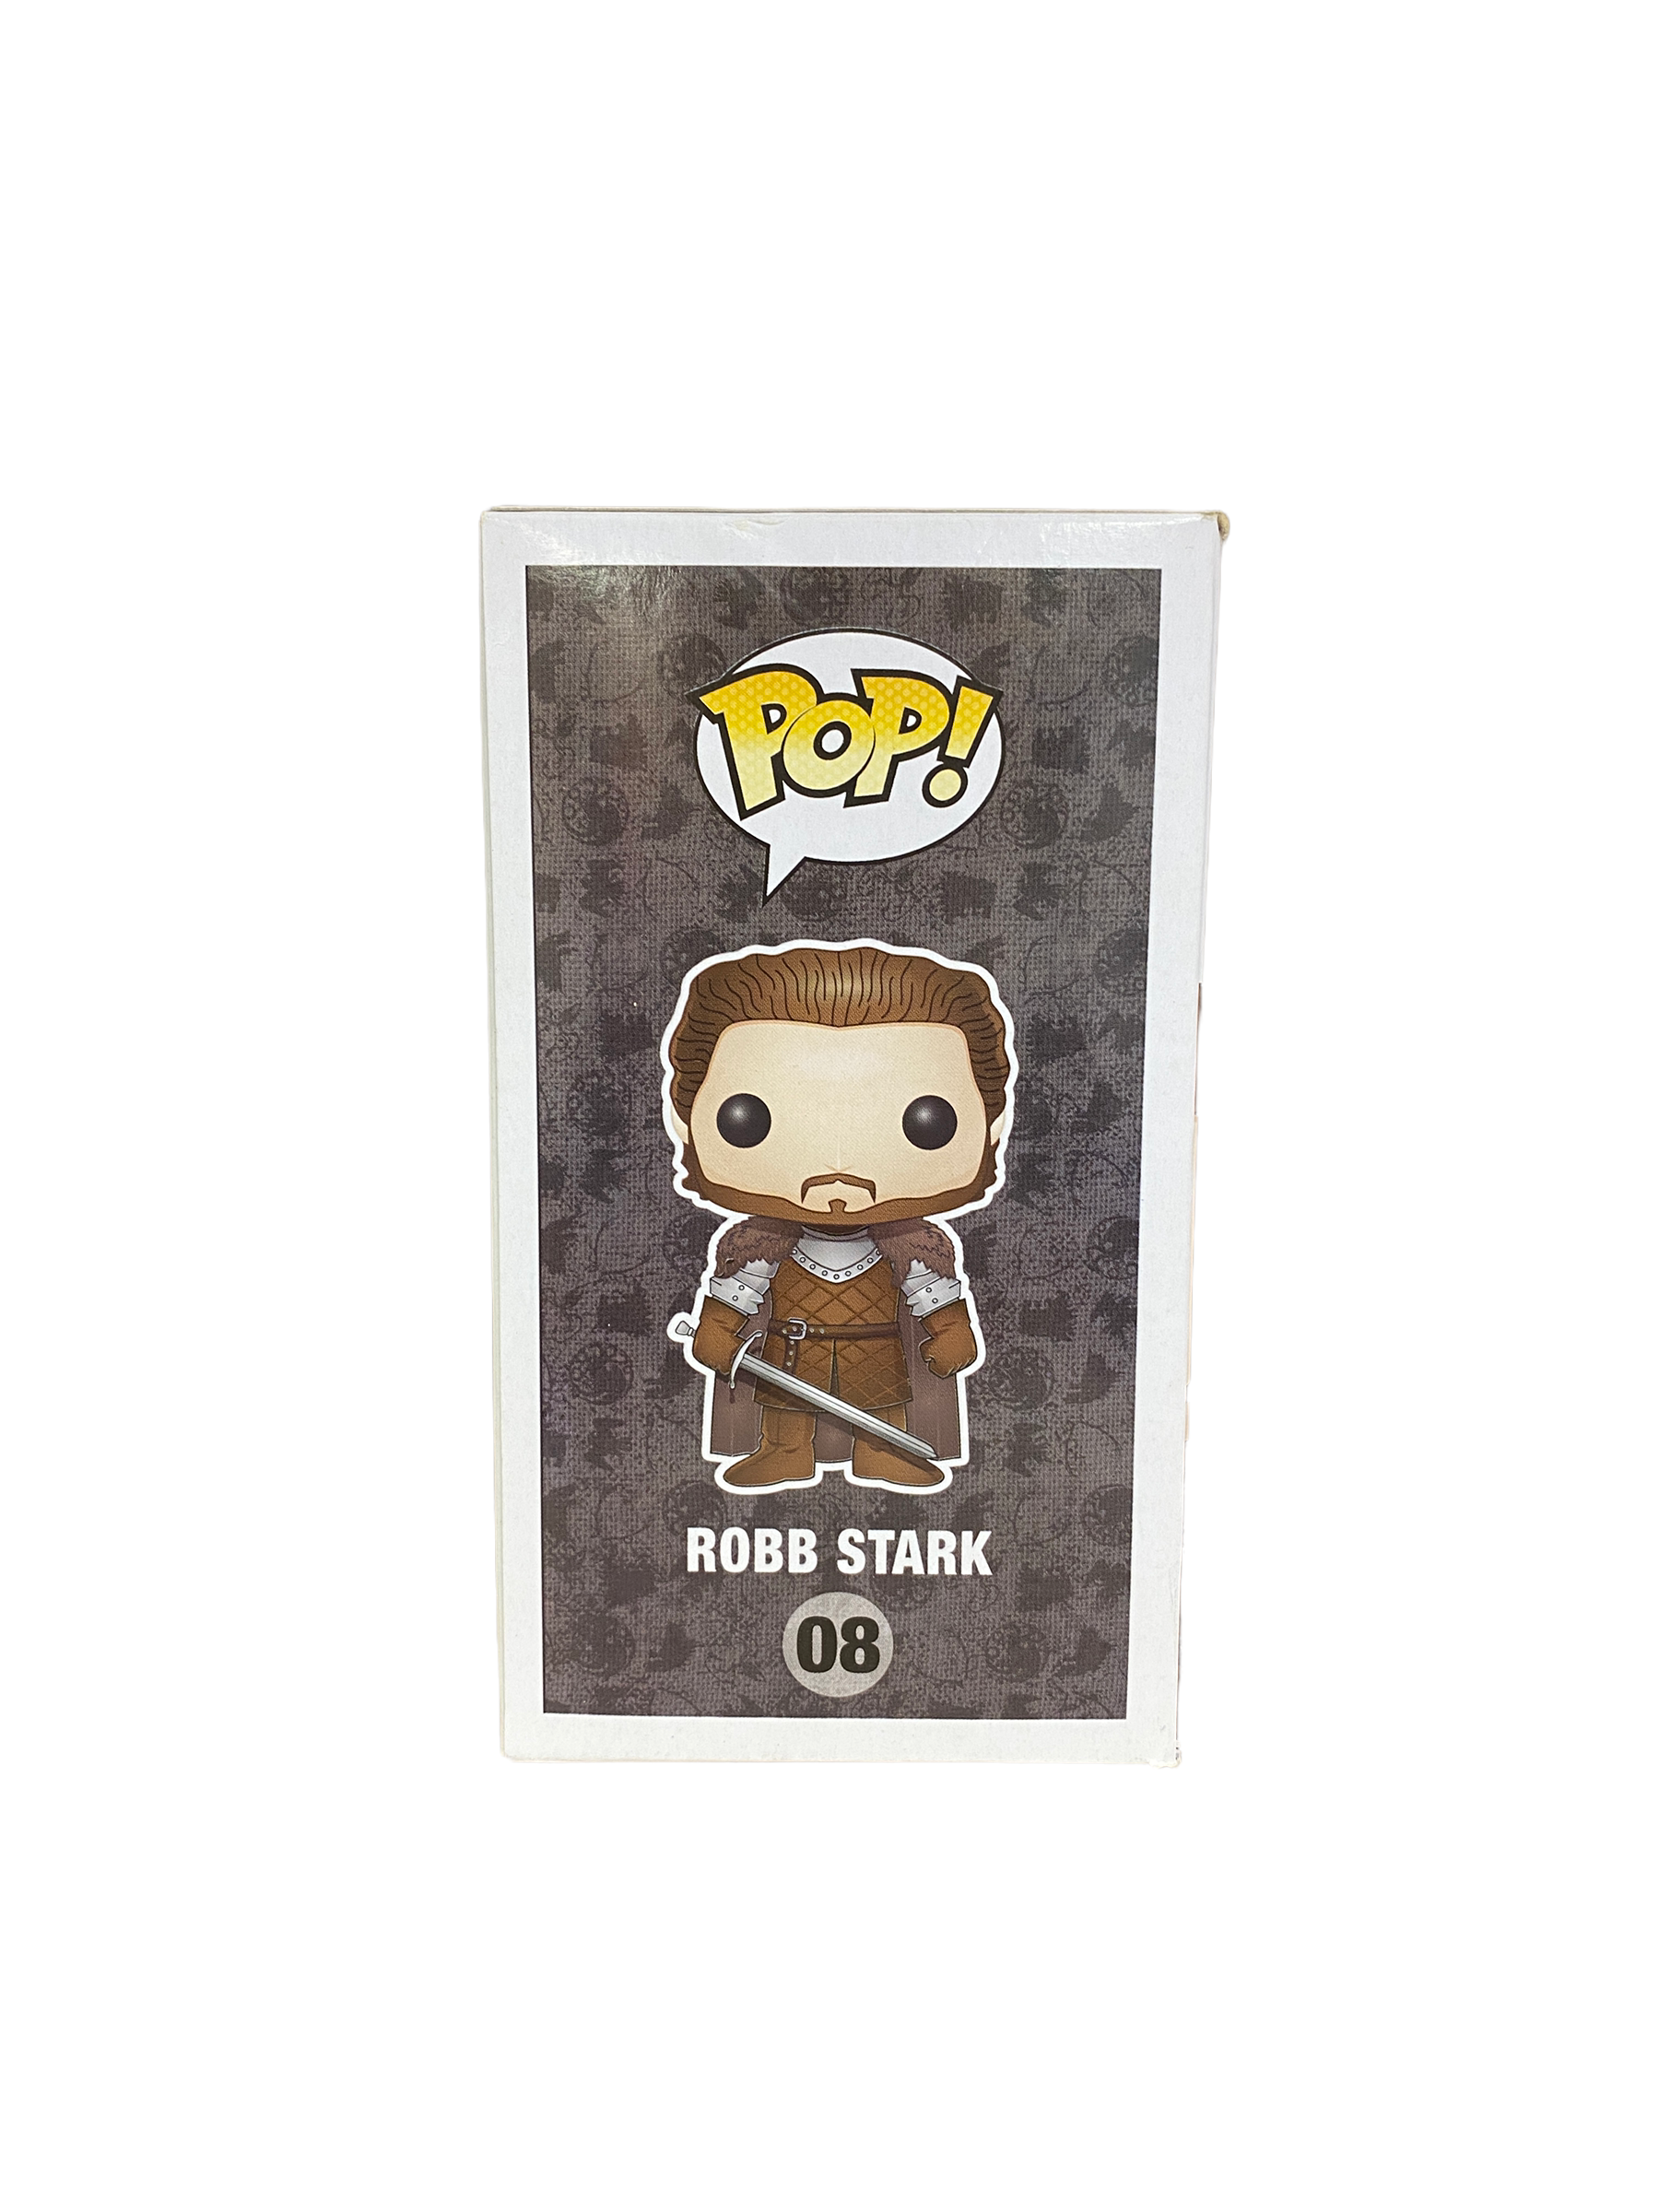 Robb Stark #08 Funko Pop! - Game Of Thrones - 2014 Pop! - Condition 7.5/10